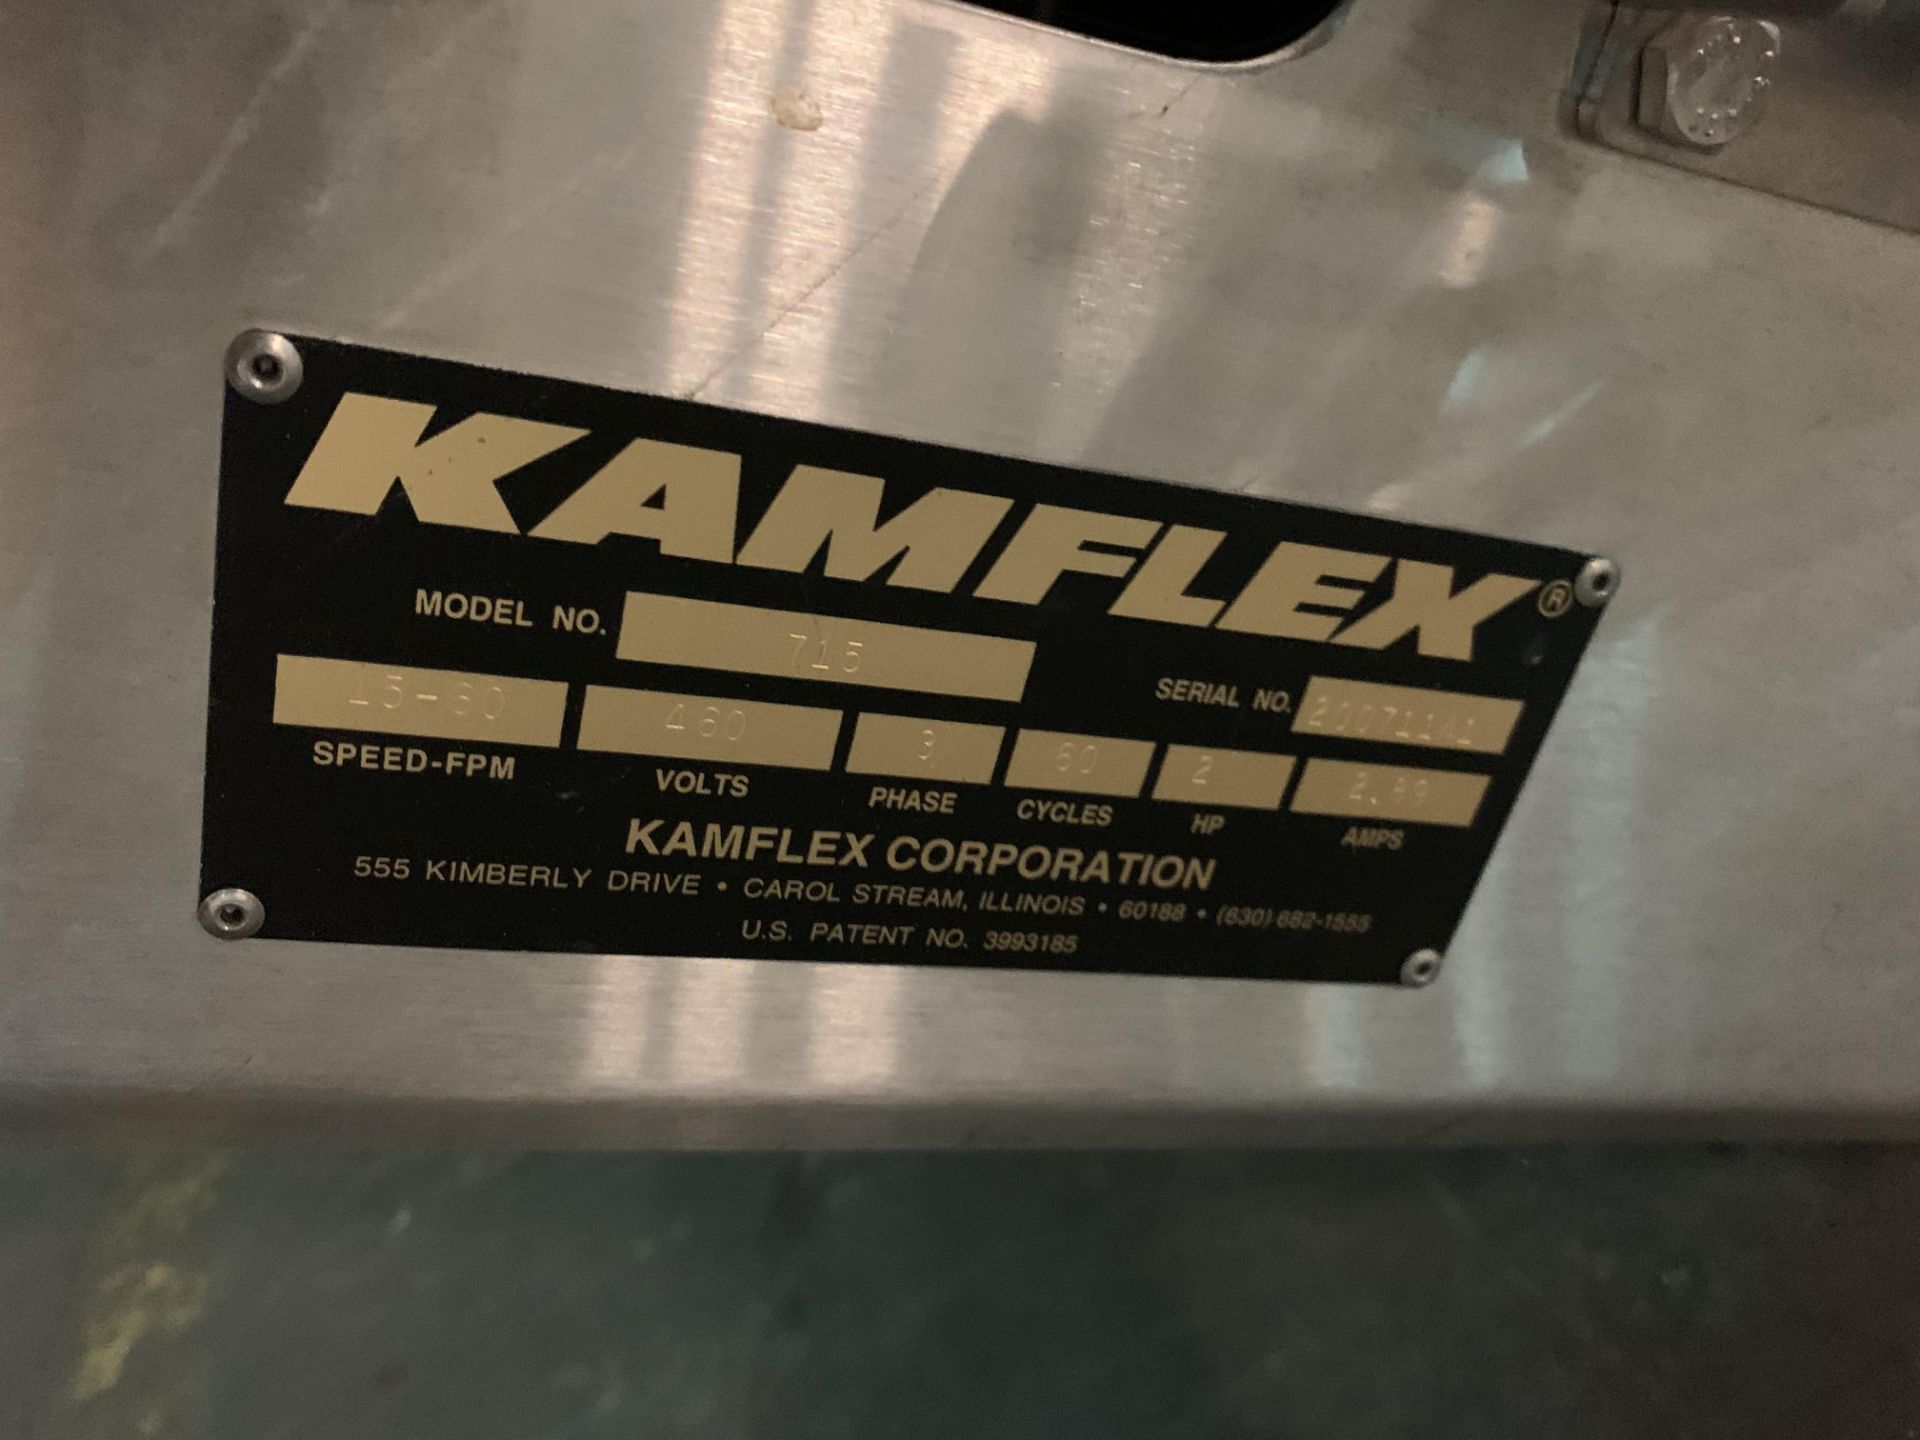 Kamflex Model 715 Cleated Incline Belt Conveyor, Loading Fee $250 - Image 5 of 6